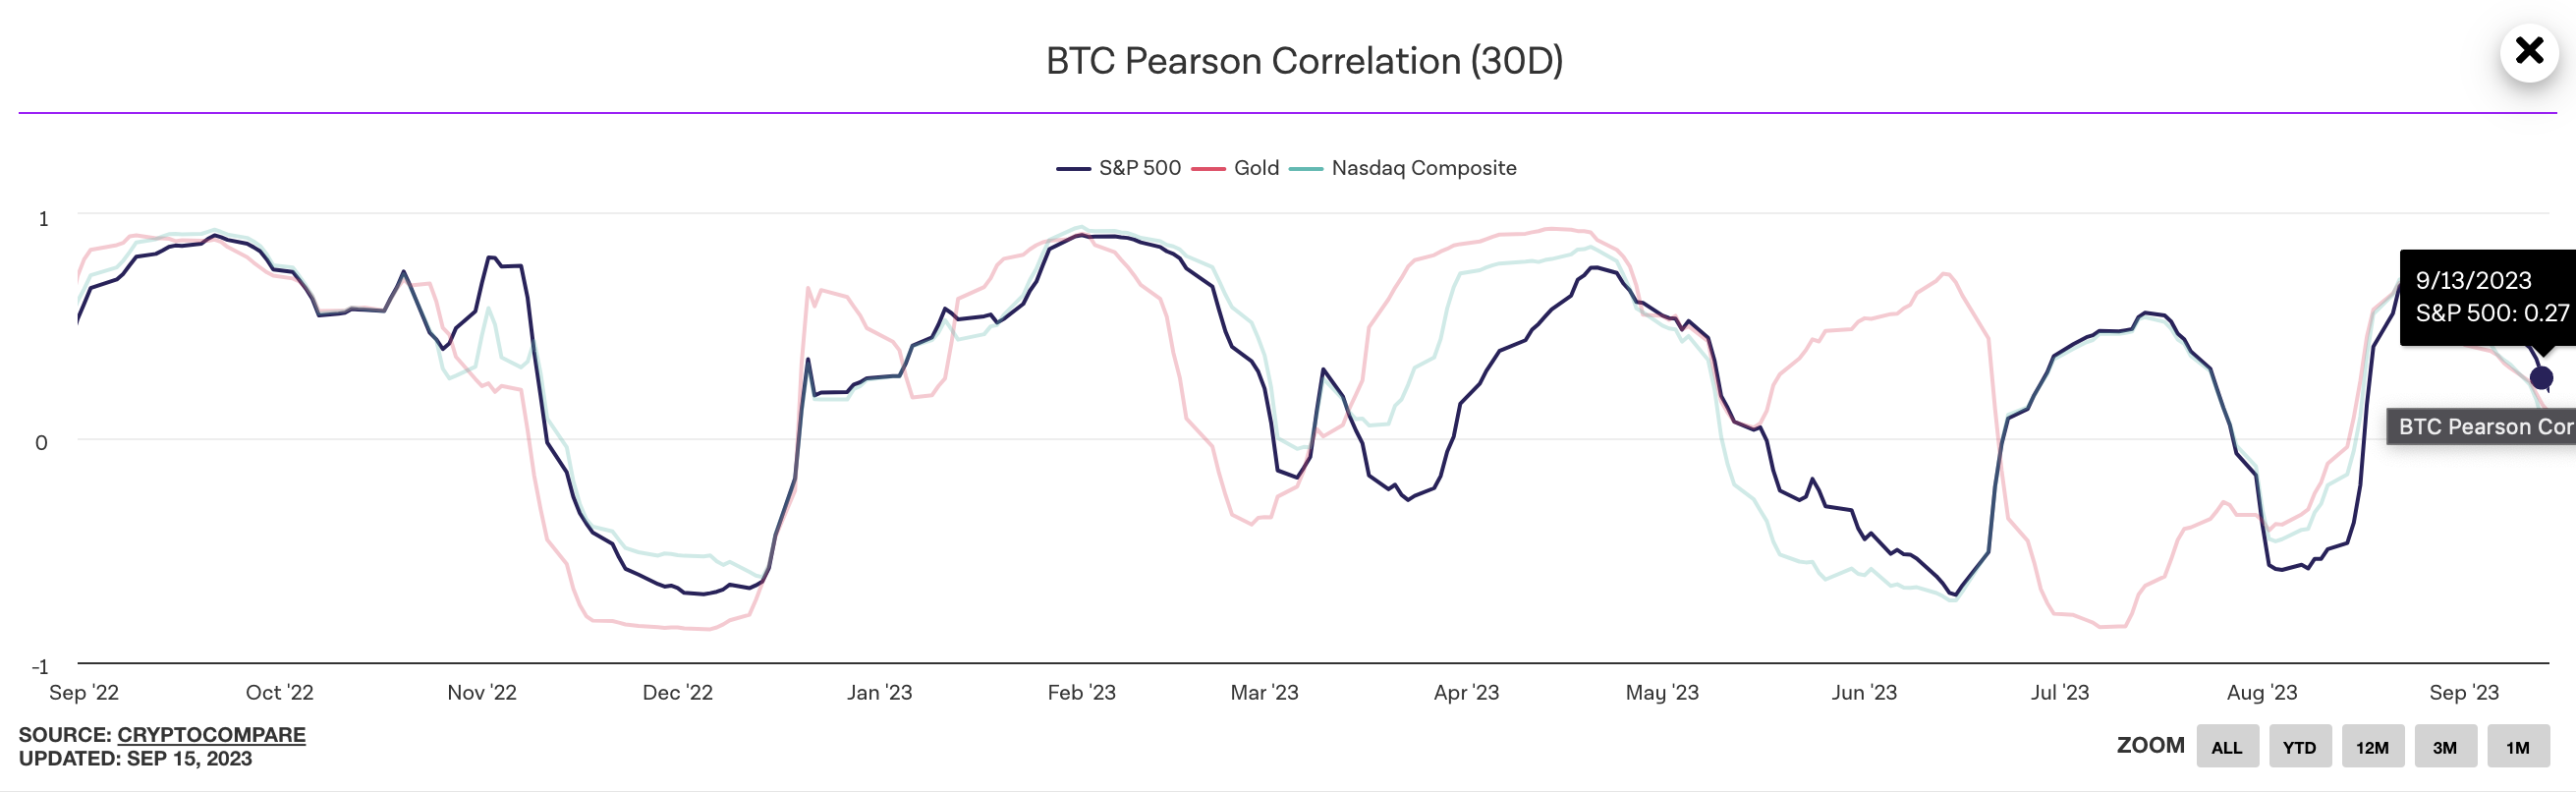 BTC Pearson Correlation (30D)